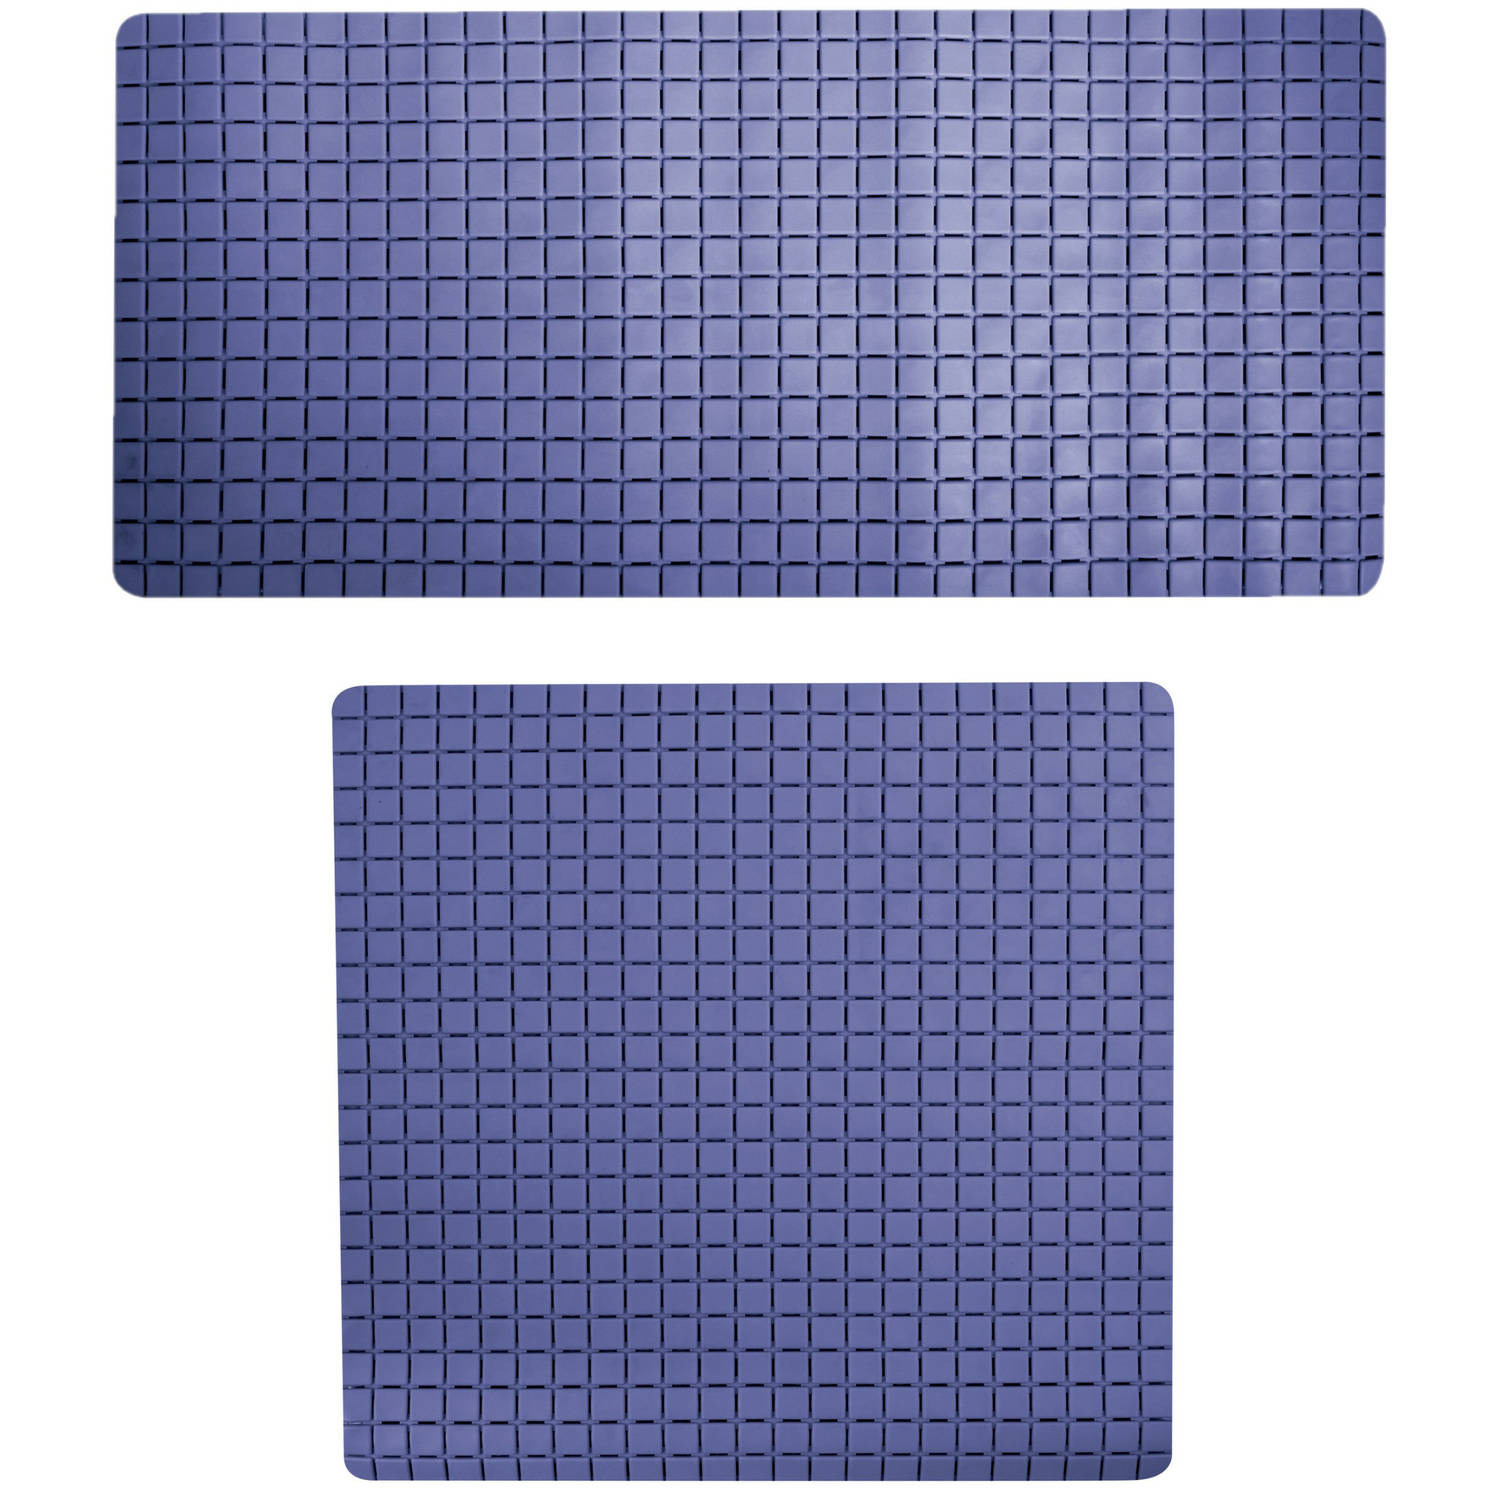 MSV Douche-bad anti-slip matten set badkamer rubber 2x stuks donkerblauw 2 formaten Badmatjes